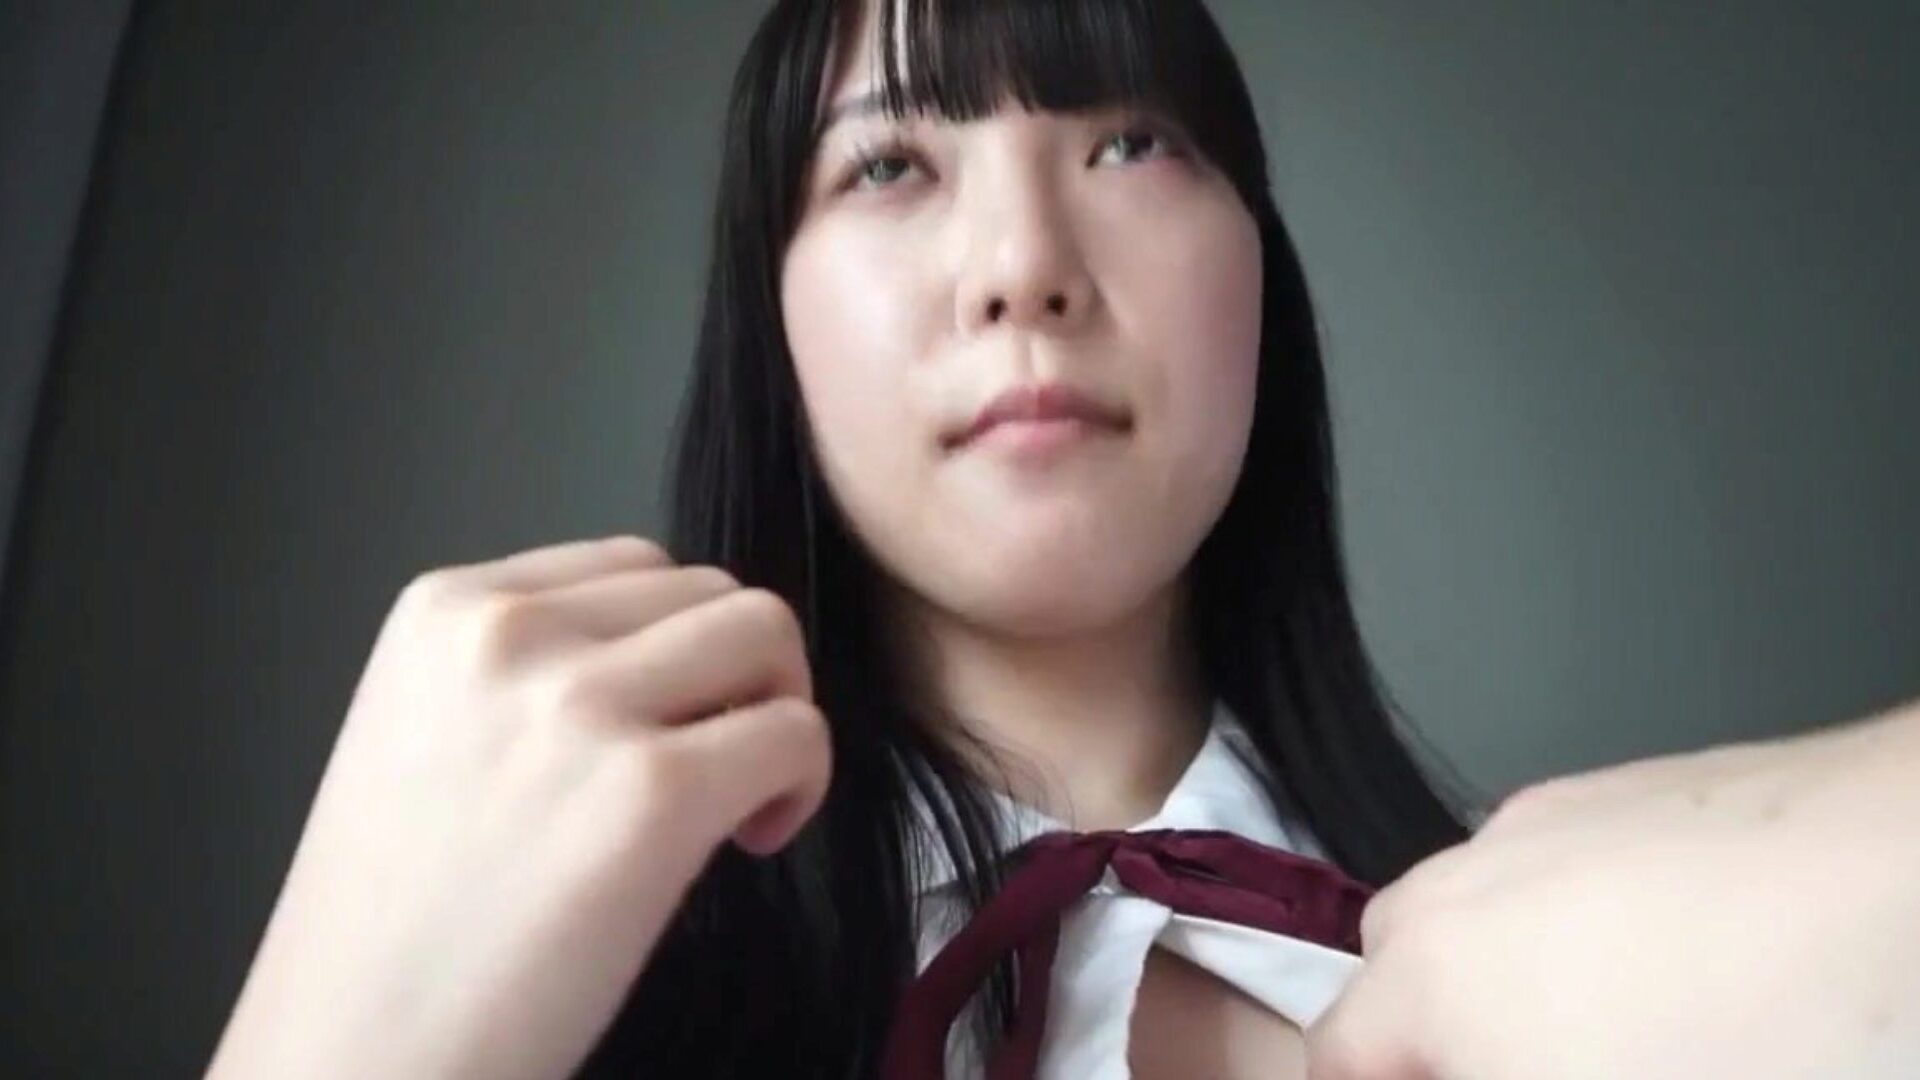 Japans schoolmeisje iku-iku-iku-iku- augustus 2020